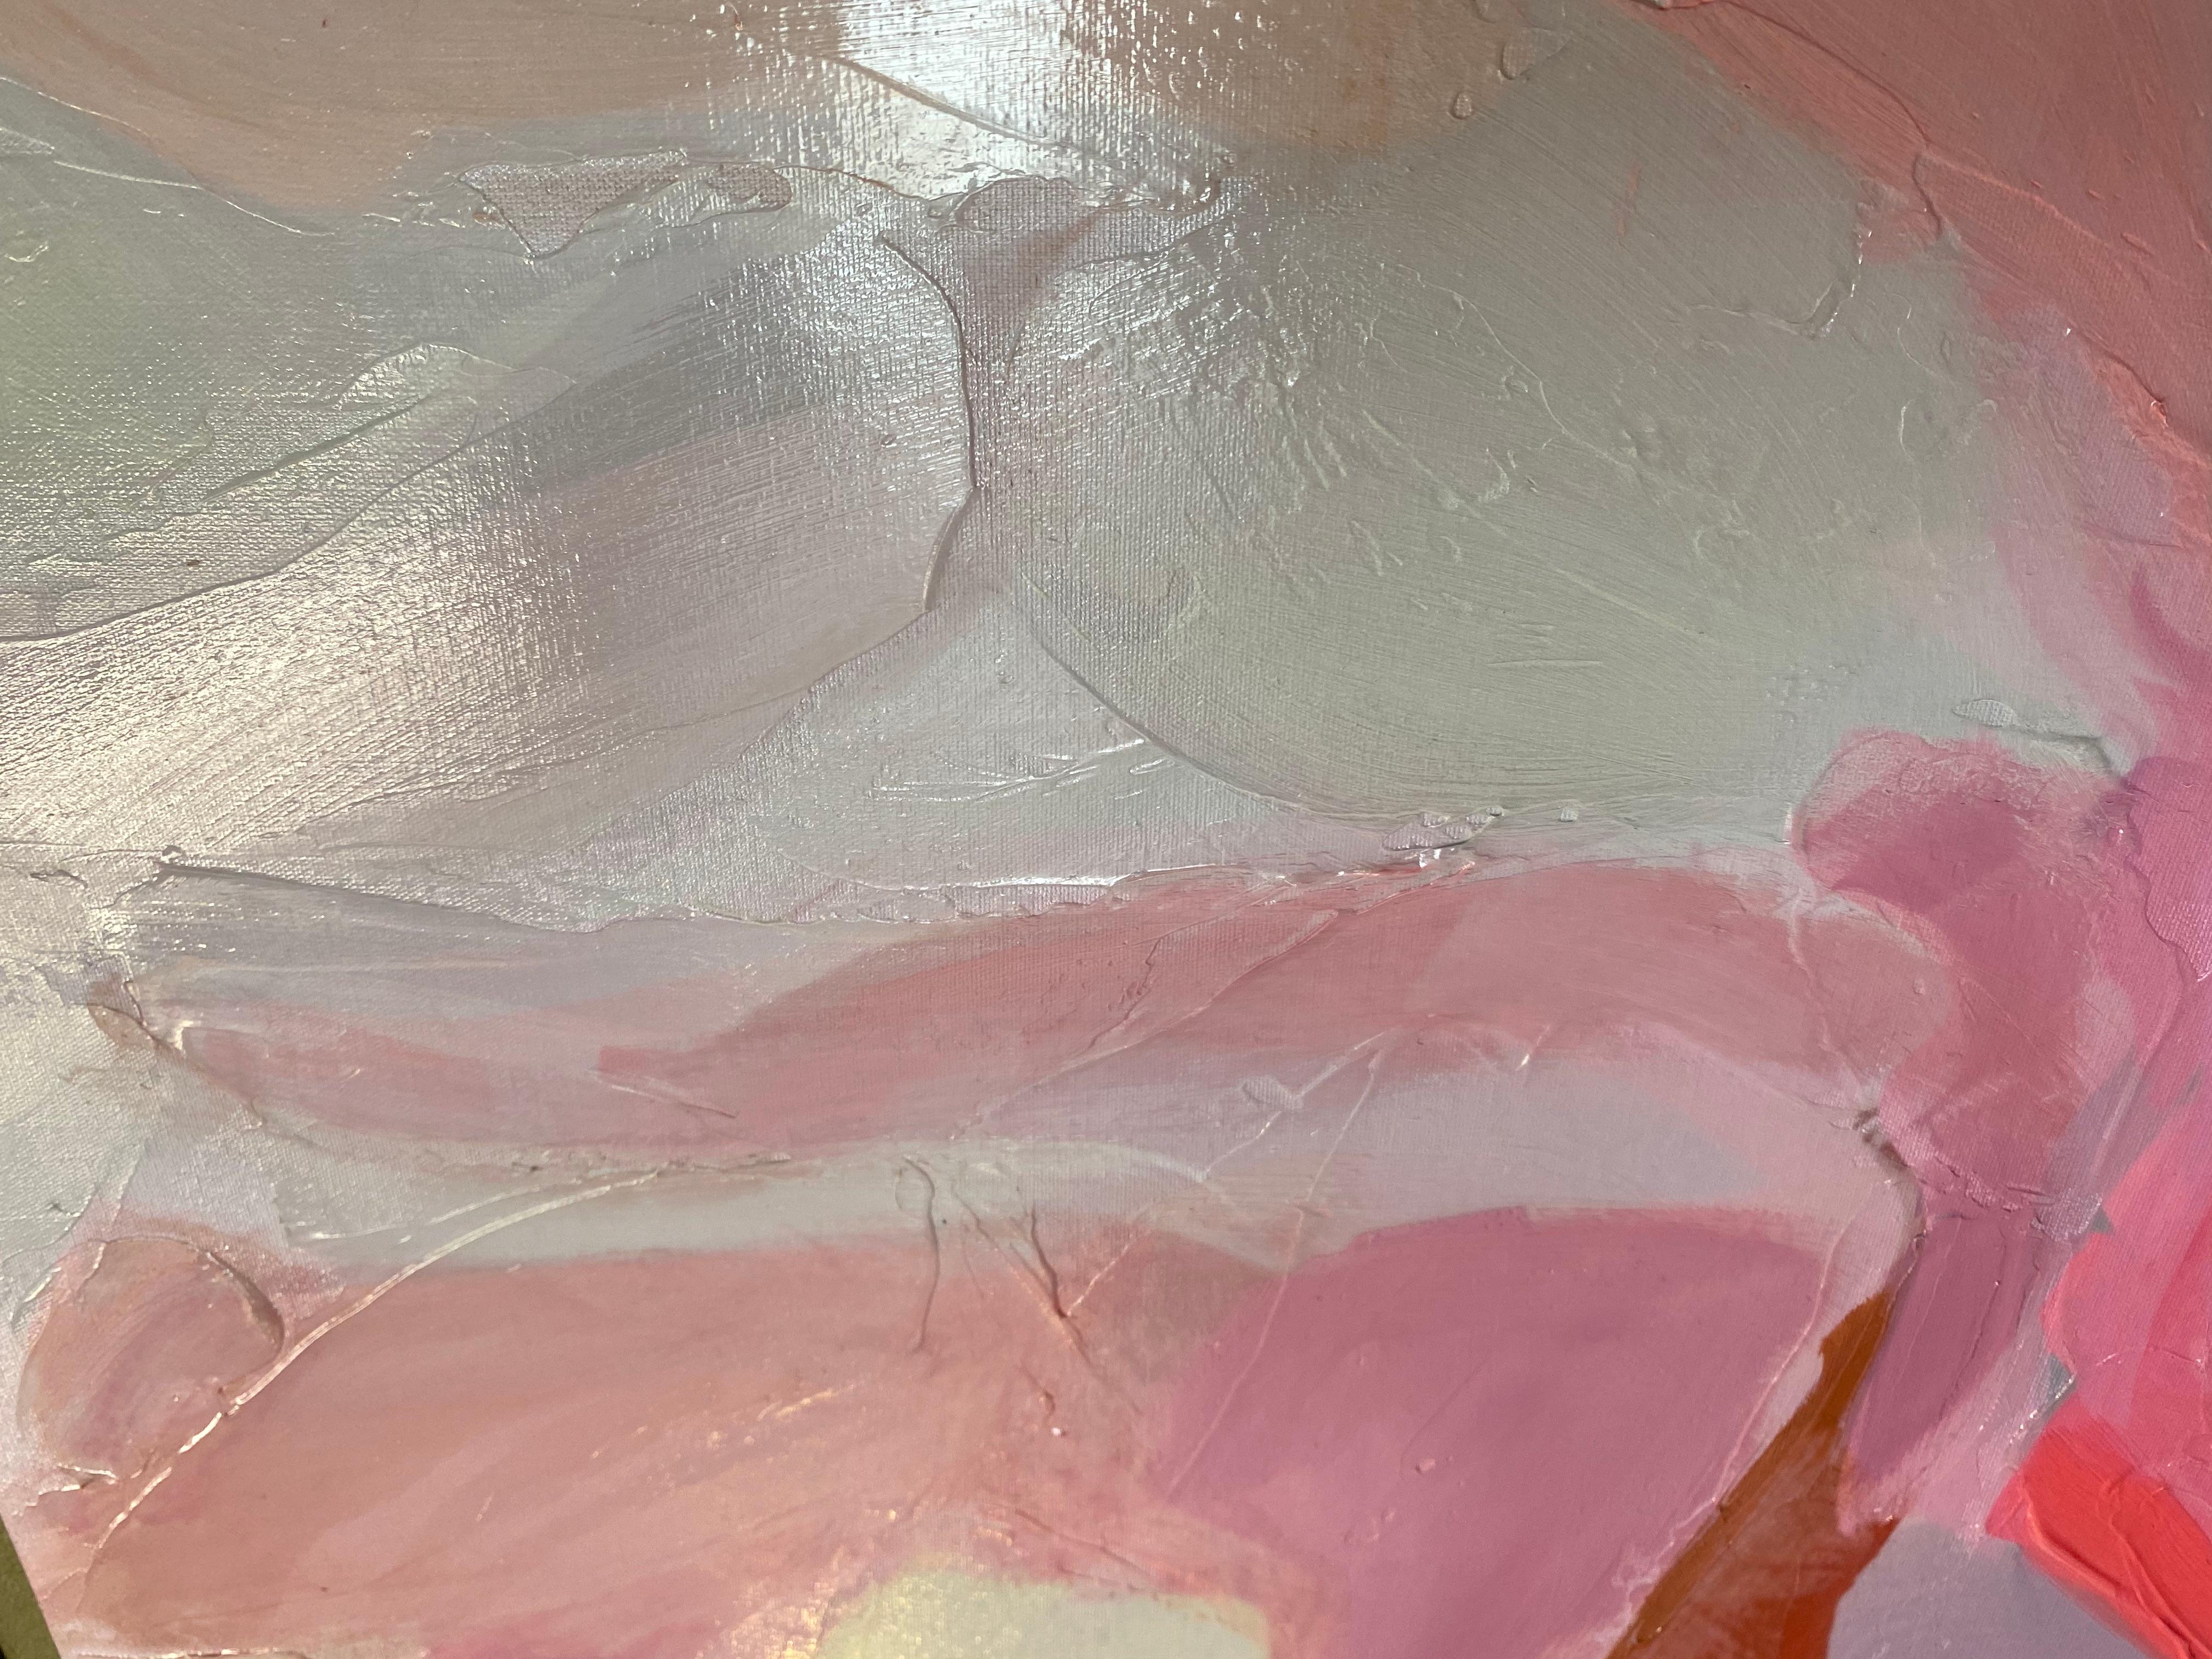 Peach Modern Painting Hand Textured Giclee on Canvas 45x45